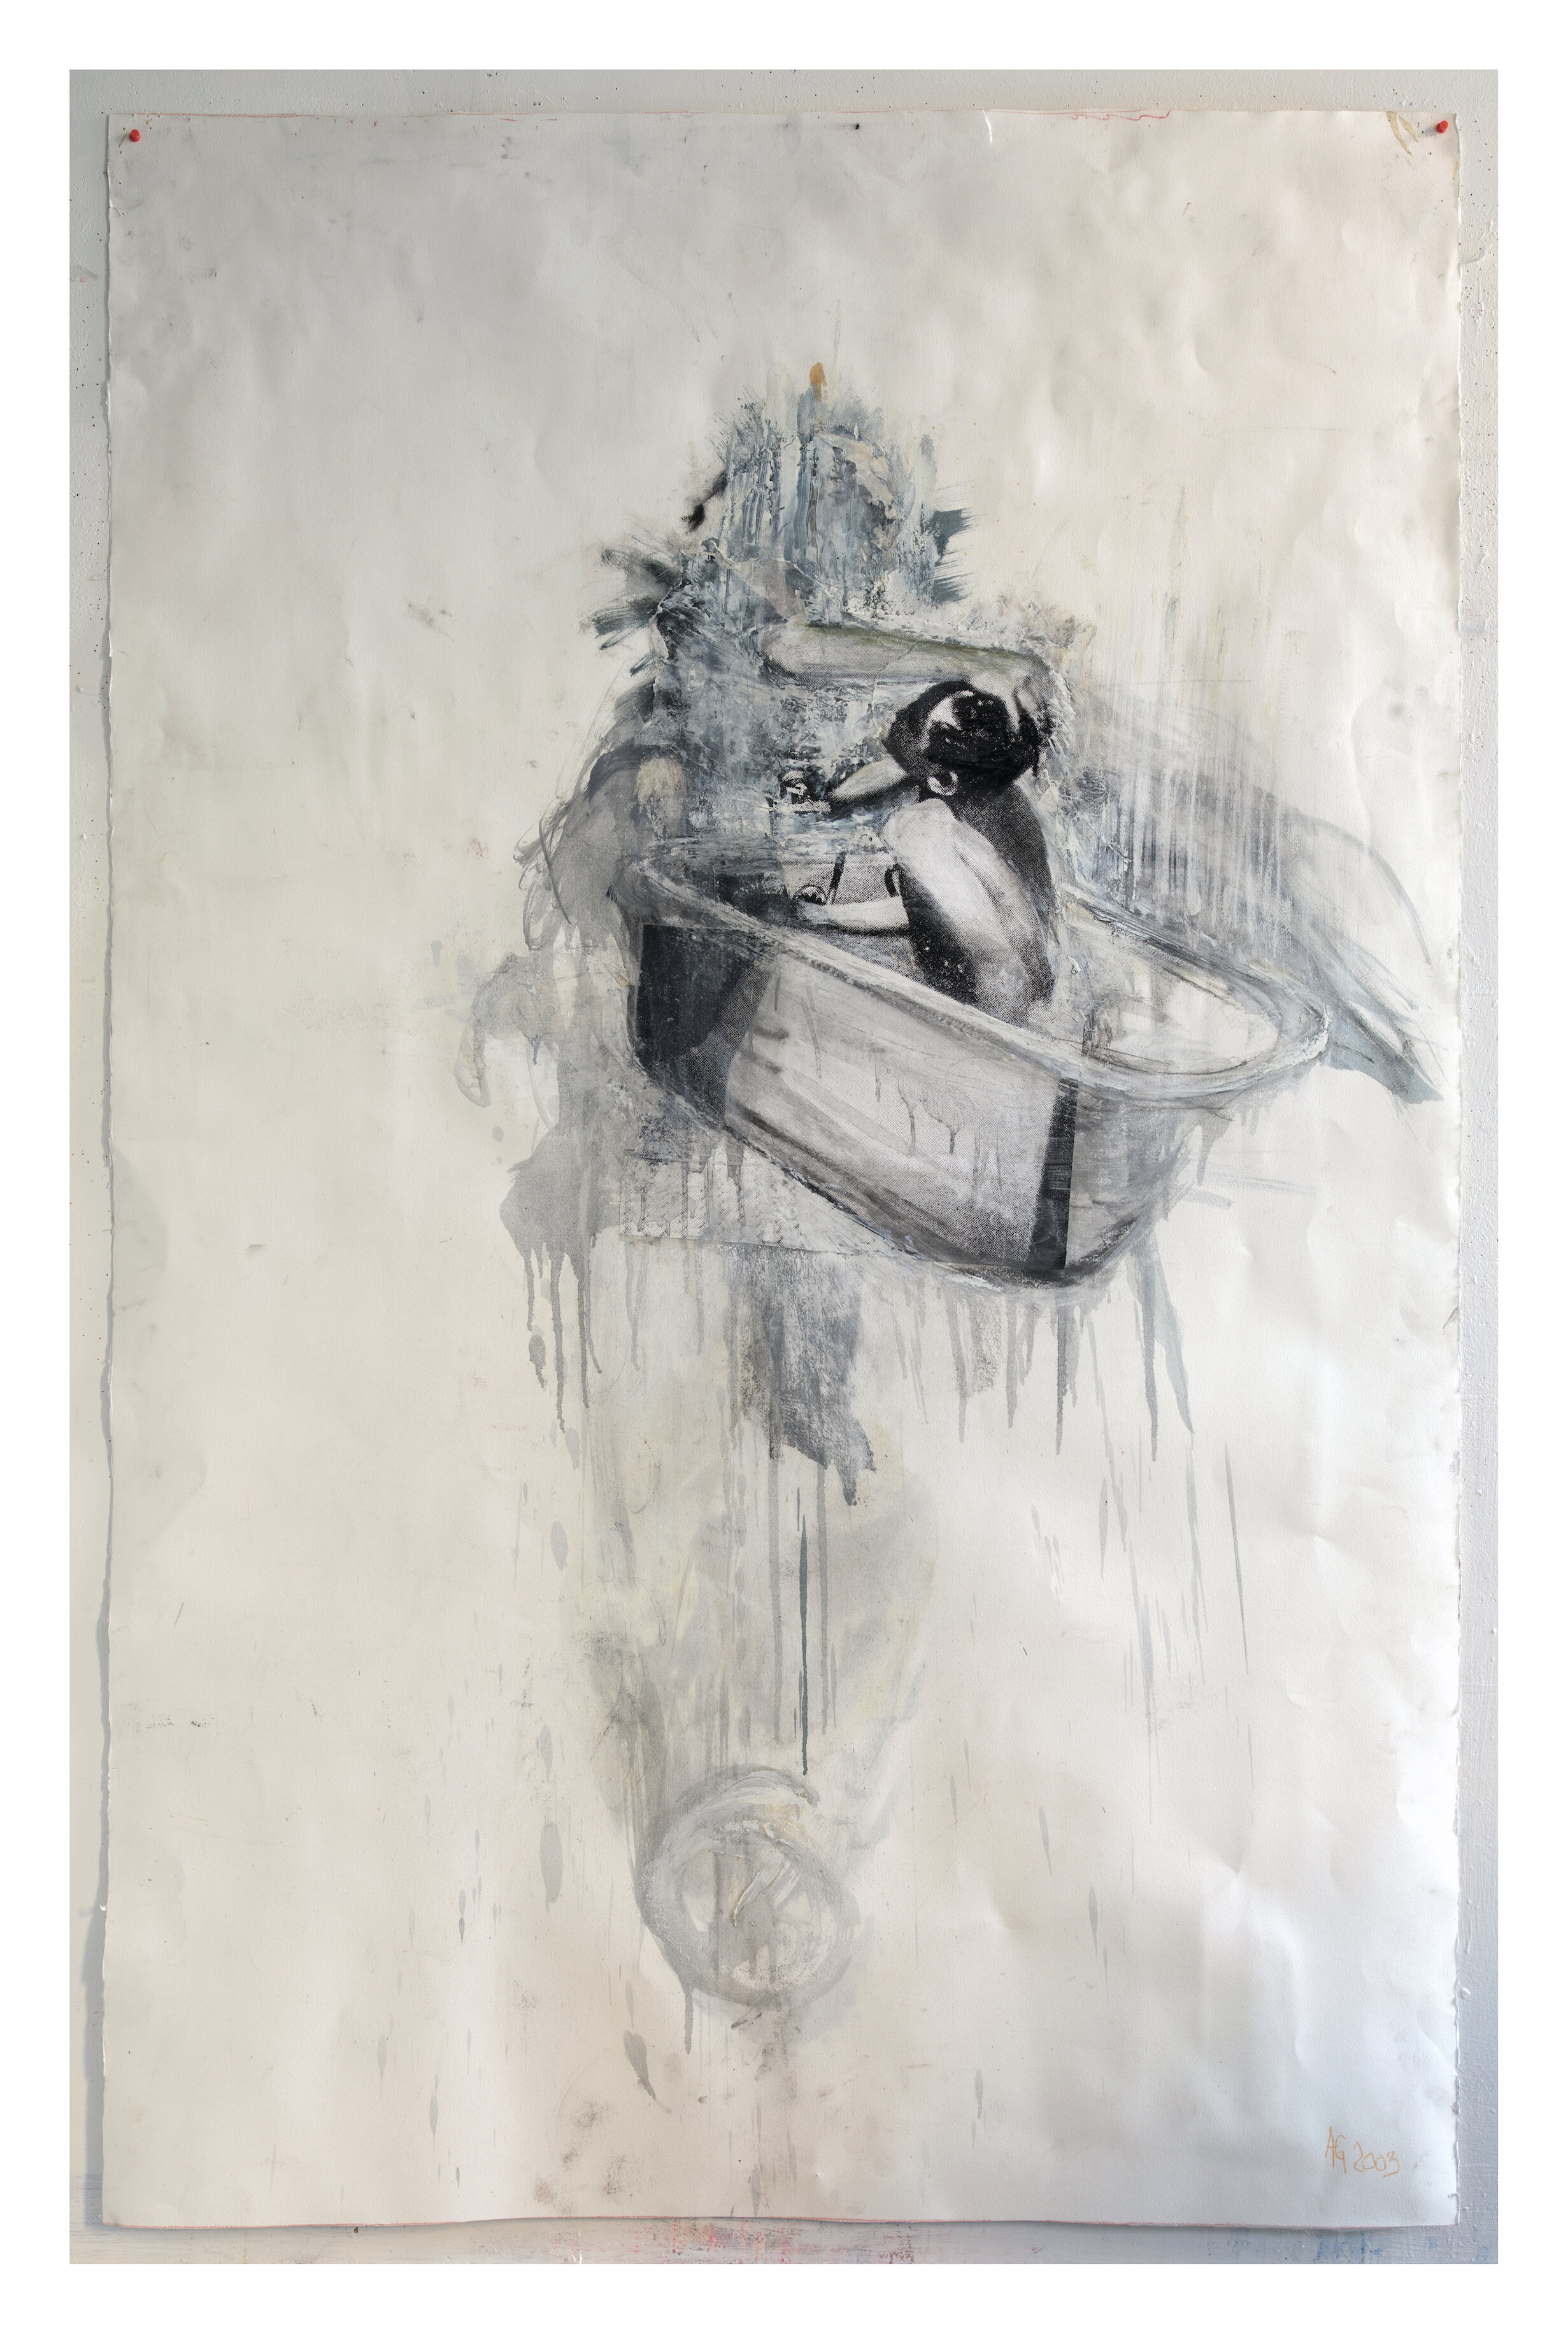  Angela Grossmann, Bath, 2003, Collage on Paper, 77 x 44.5 inches 